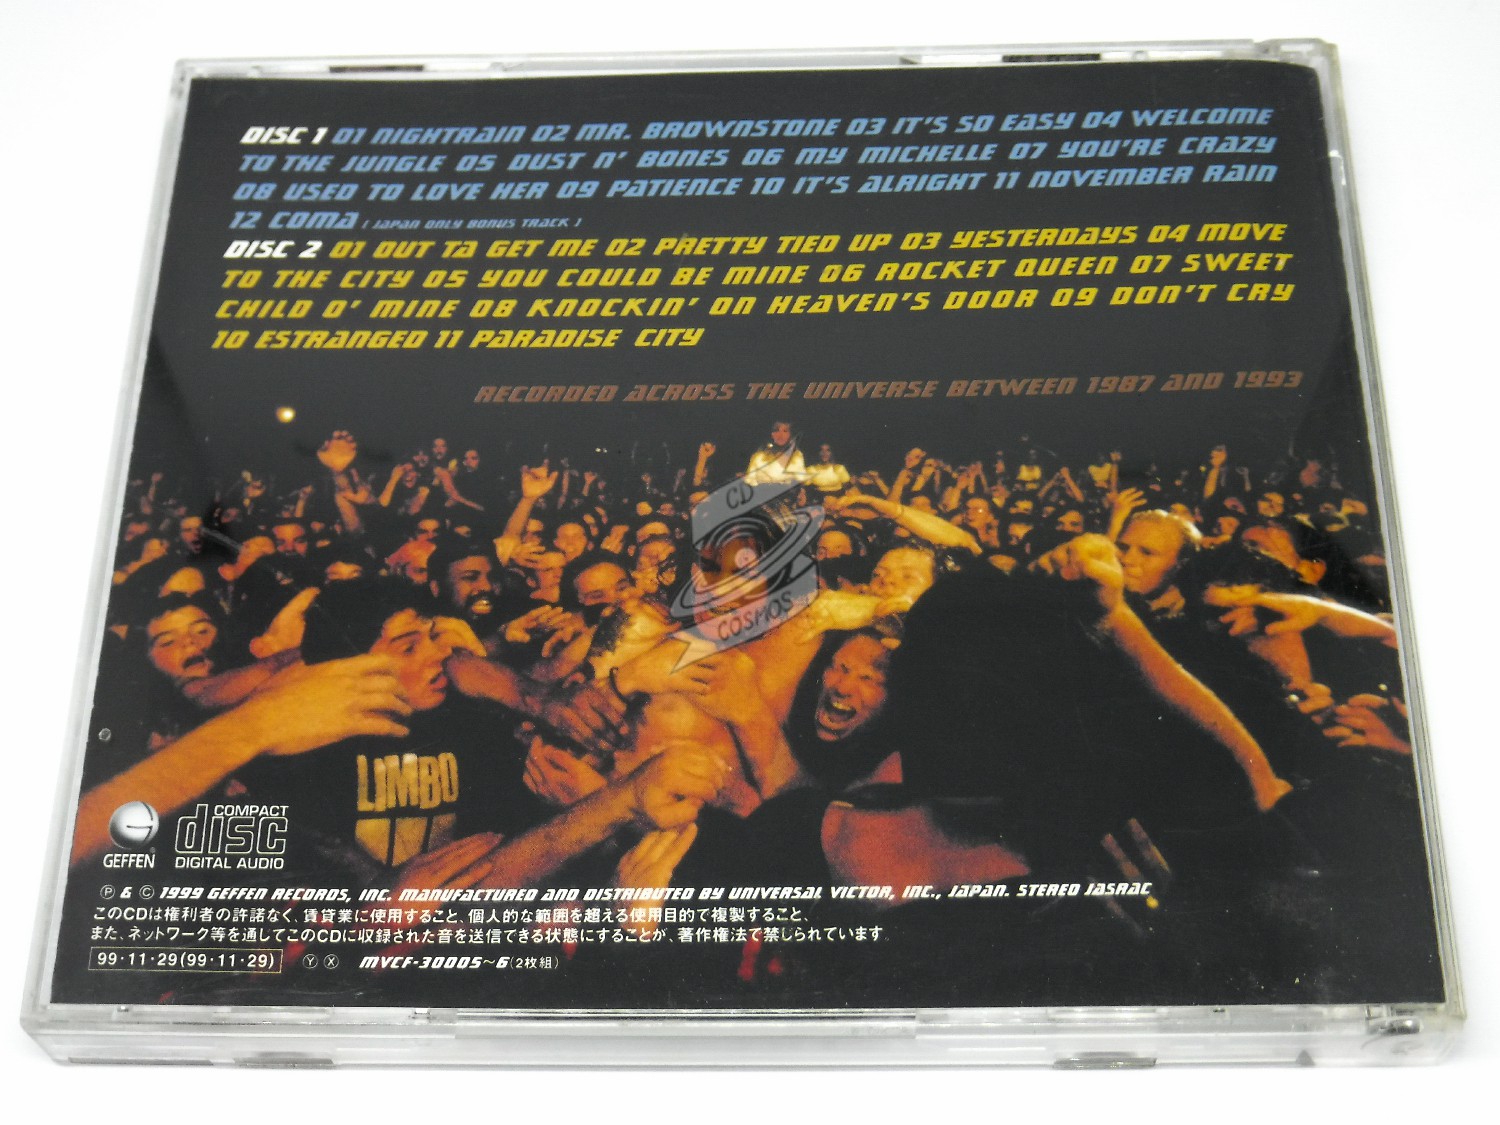 Live Era '87-'93 by Guns N' Roses (1999-11-23) -  Music